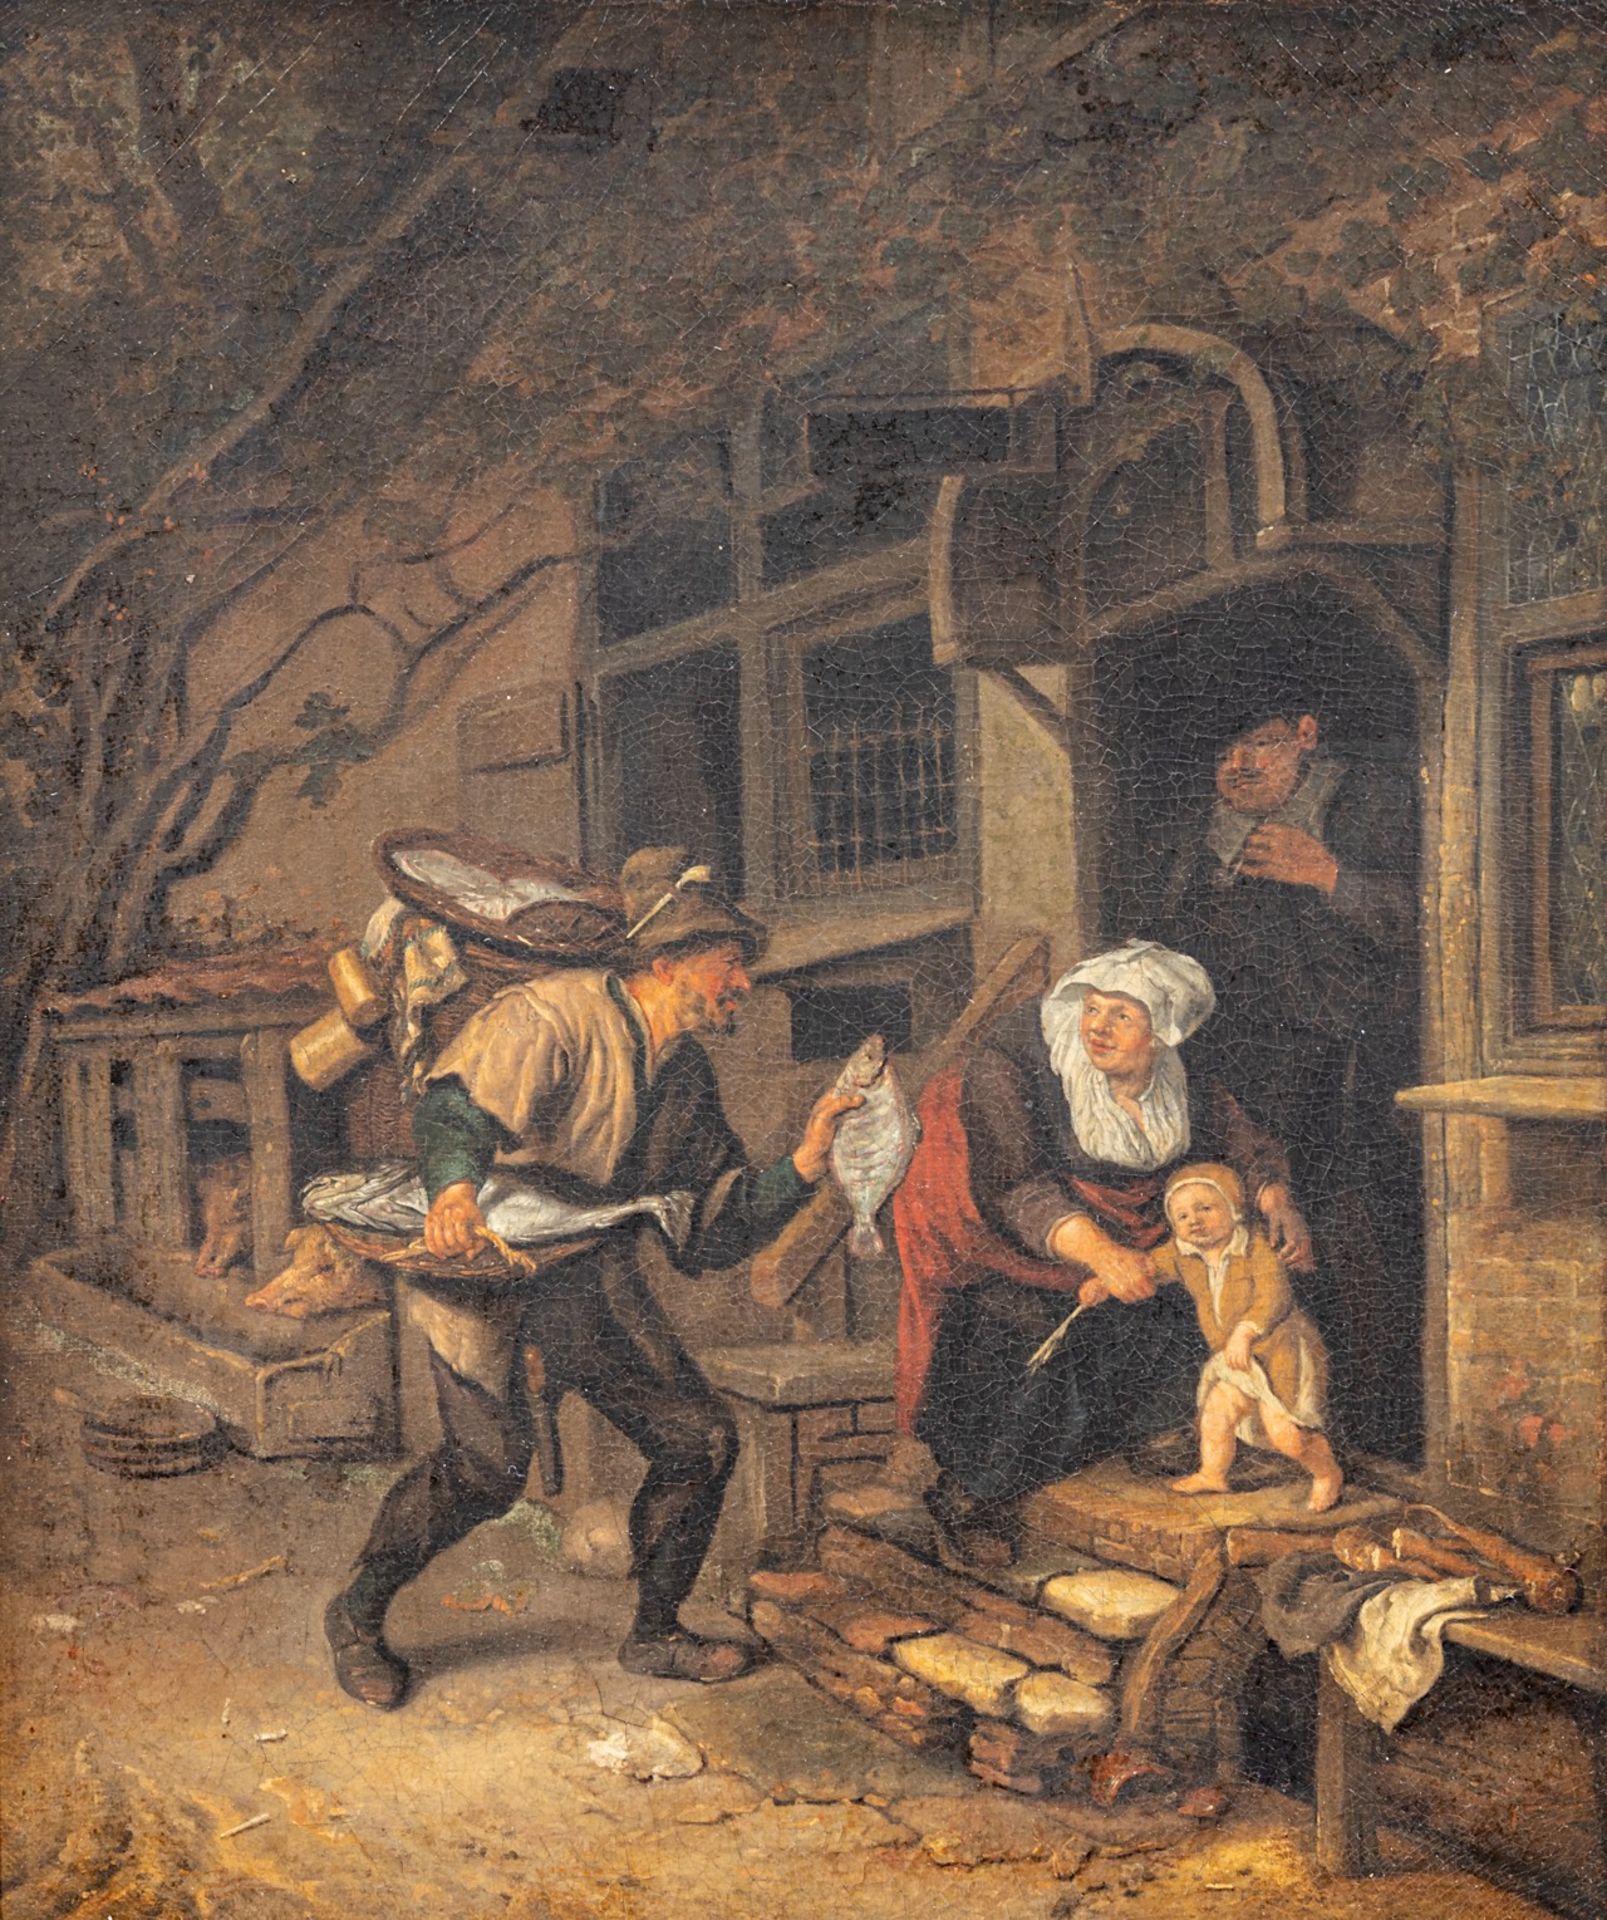 Attrib. to Cornelis Dusart (1660-1704), the fish vendor, oil on canvas 49 x 41.5 cm. (19.2 x 16.3 in